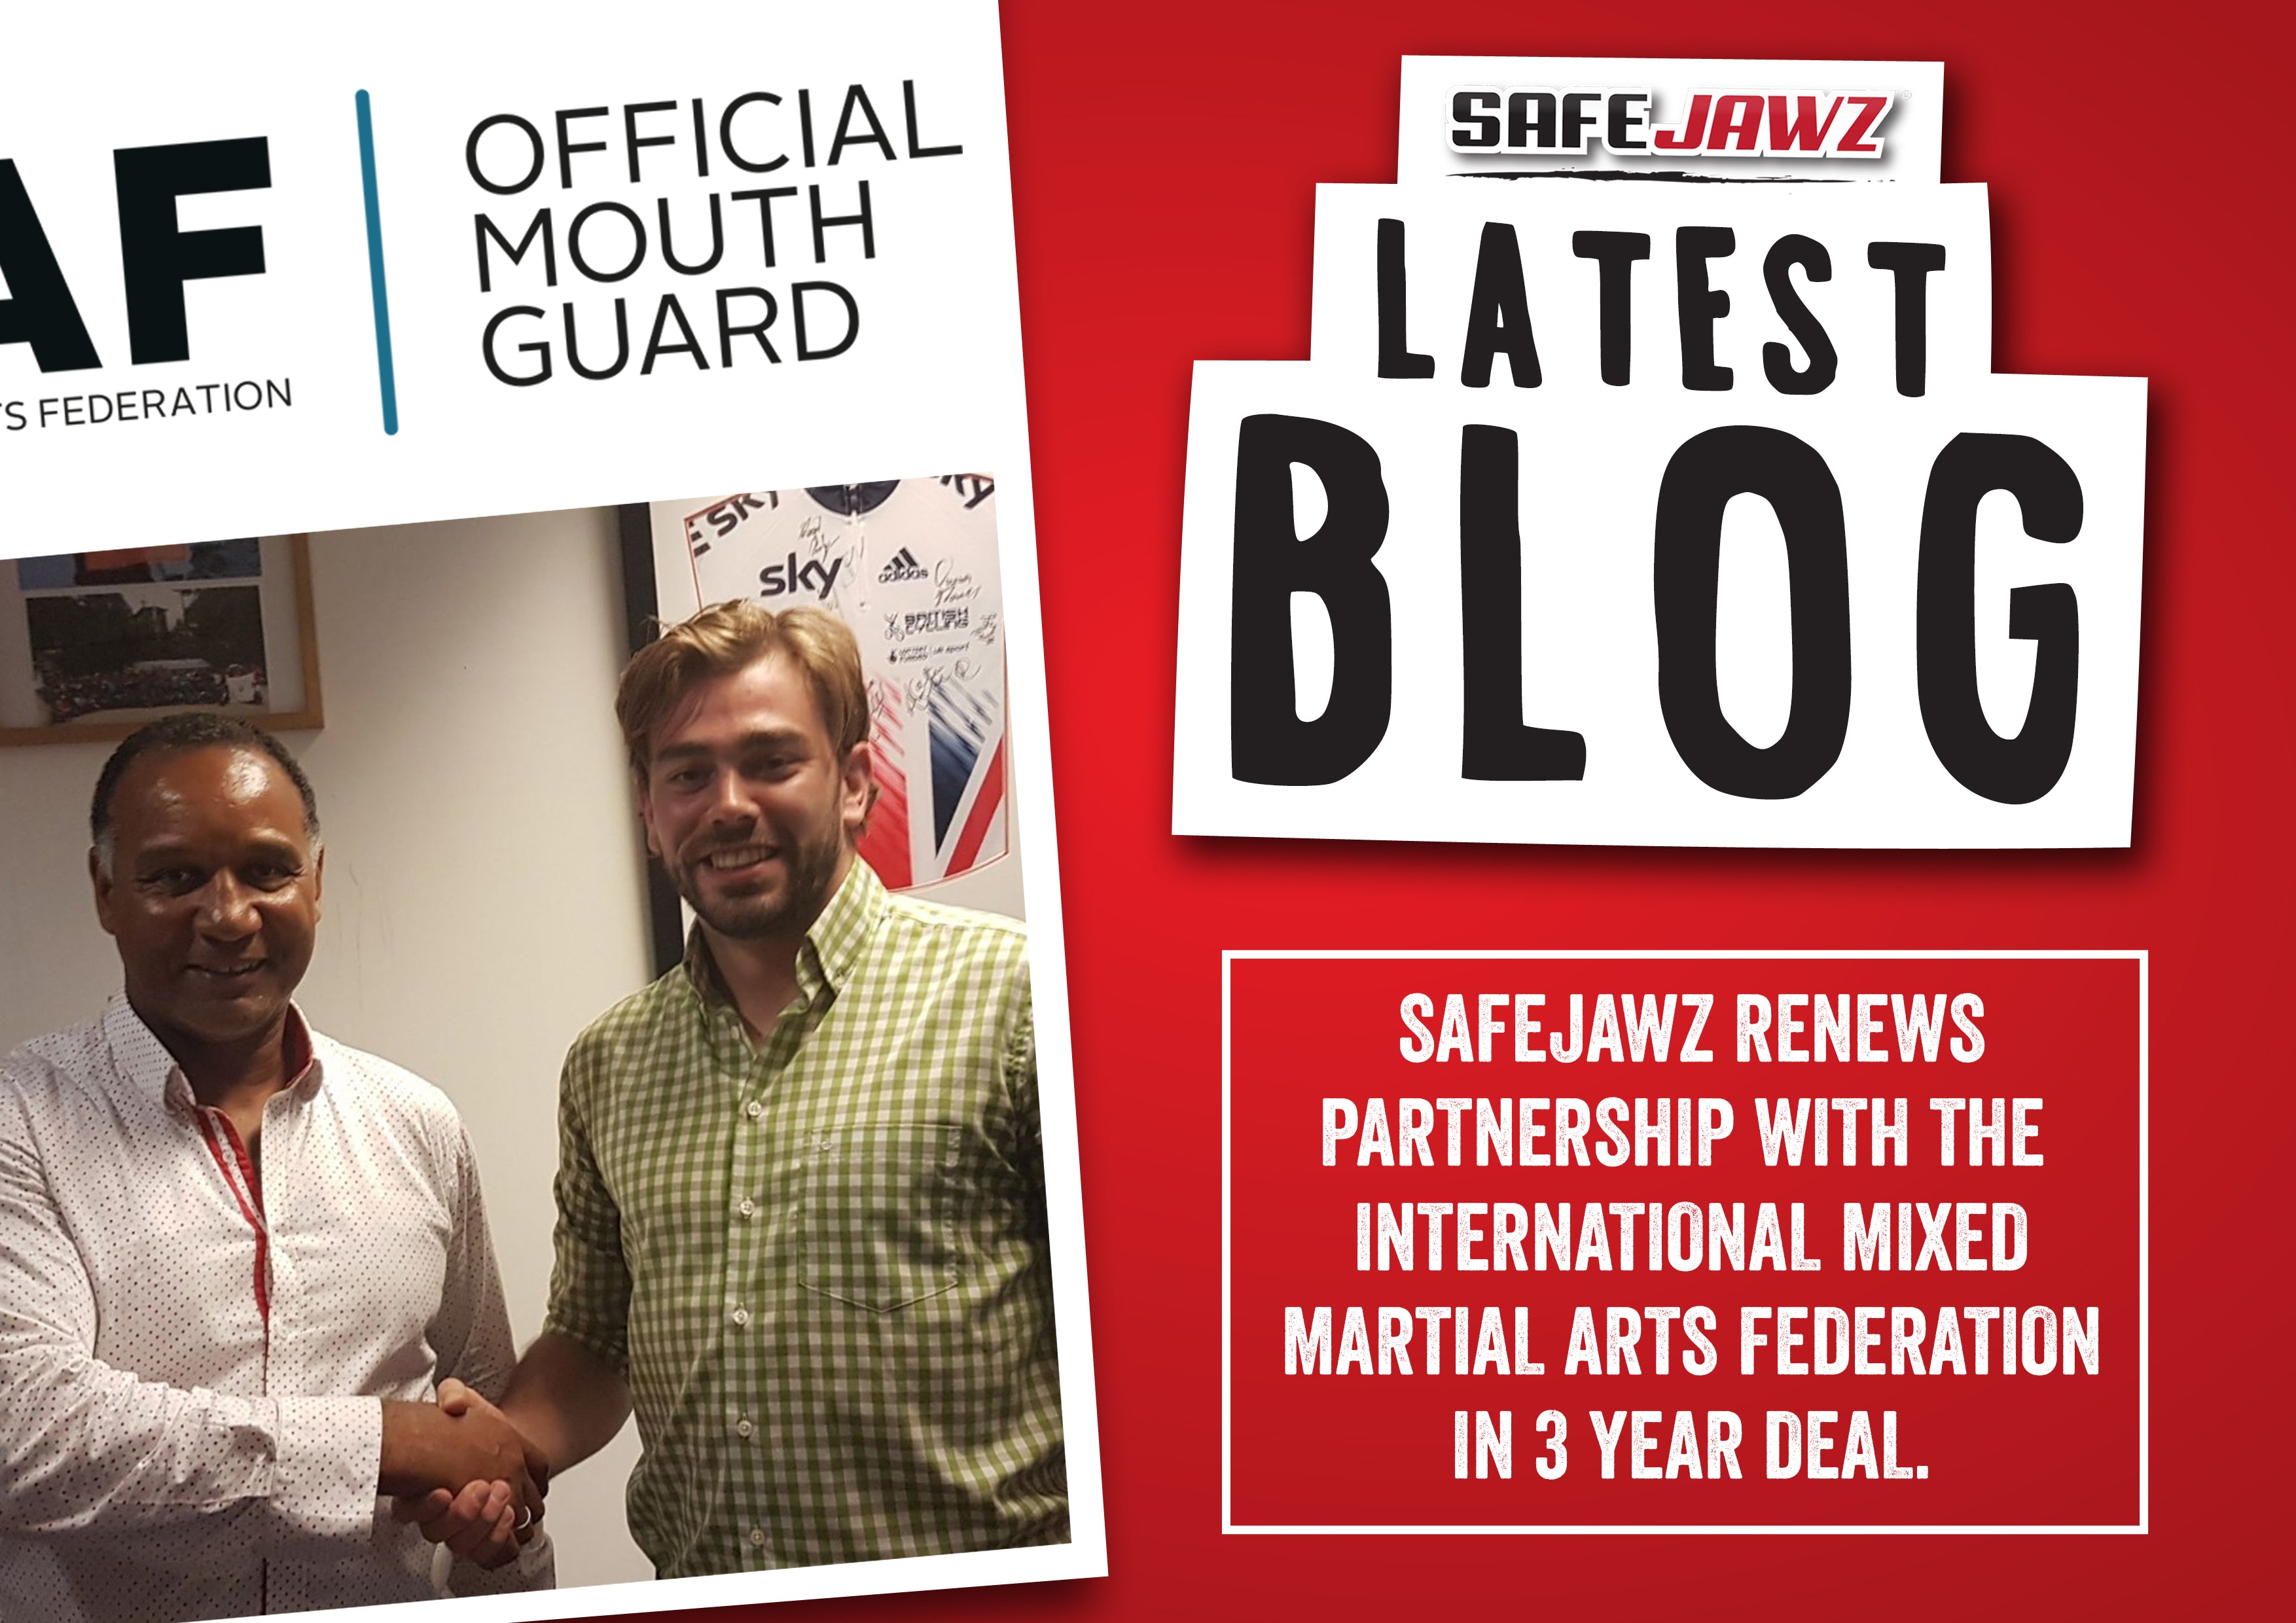 SAFEJAWZ Renew Partnership with the International Mixed Martial Arts Federation.